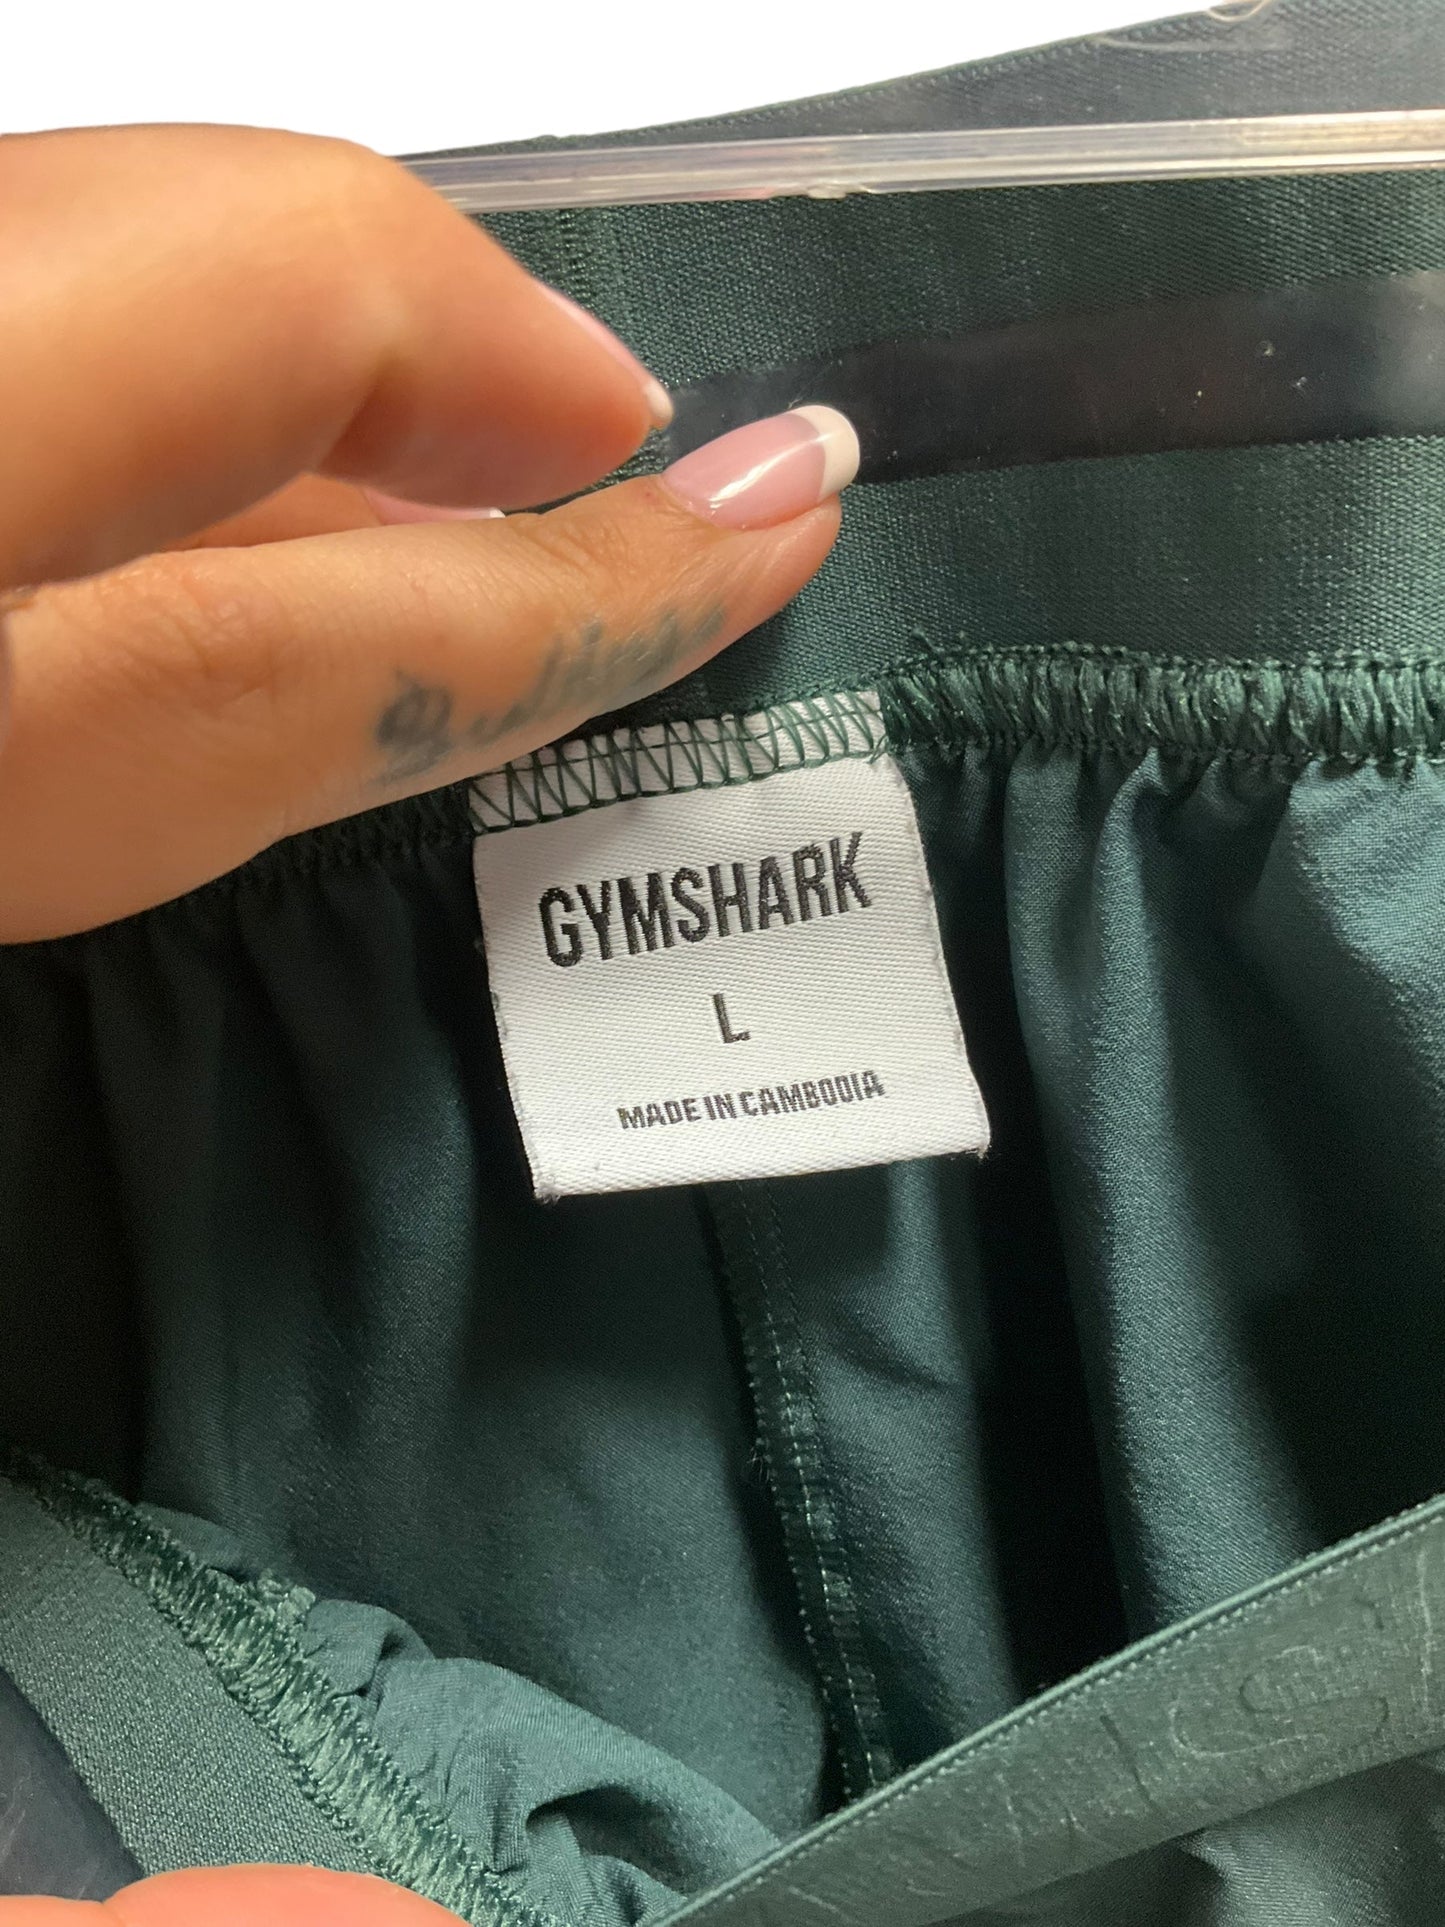 Green Athletic Shorts Gym Shark, Size L